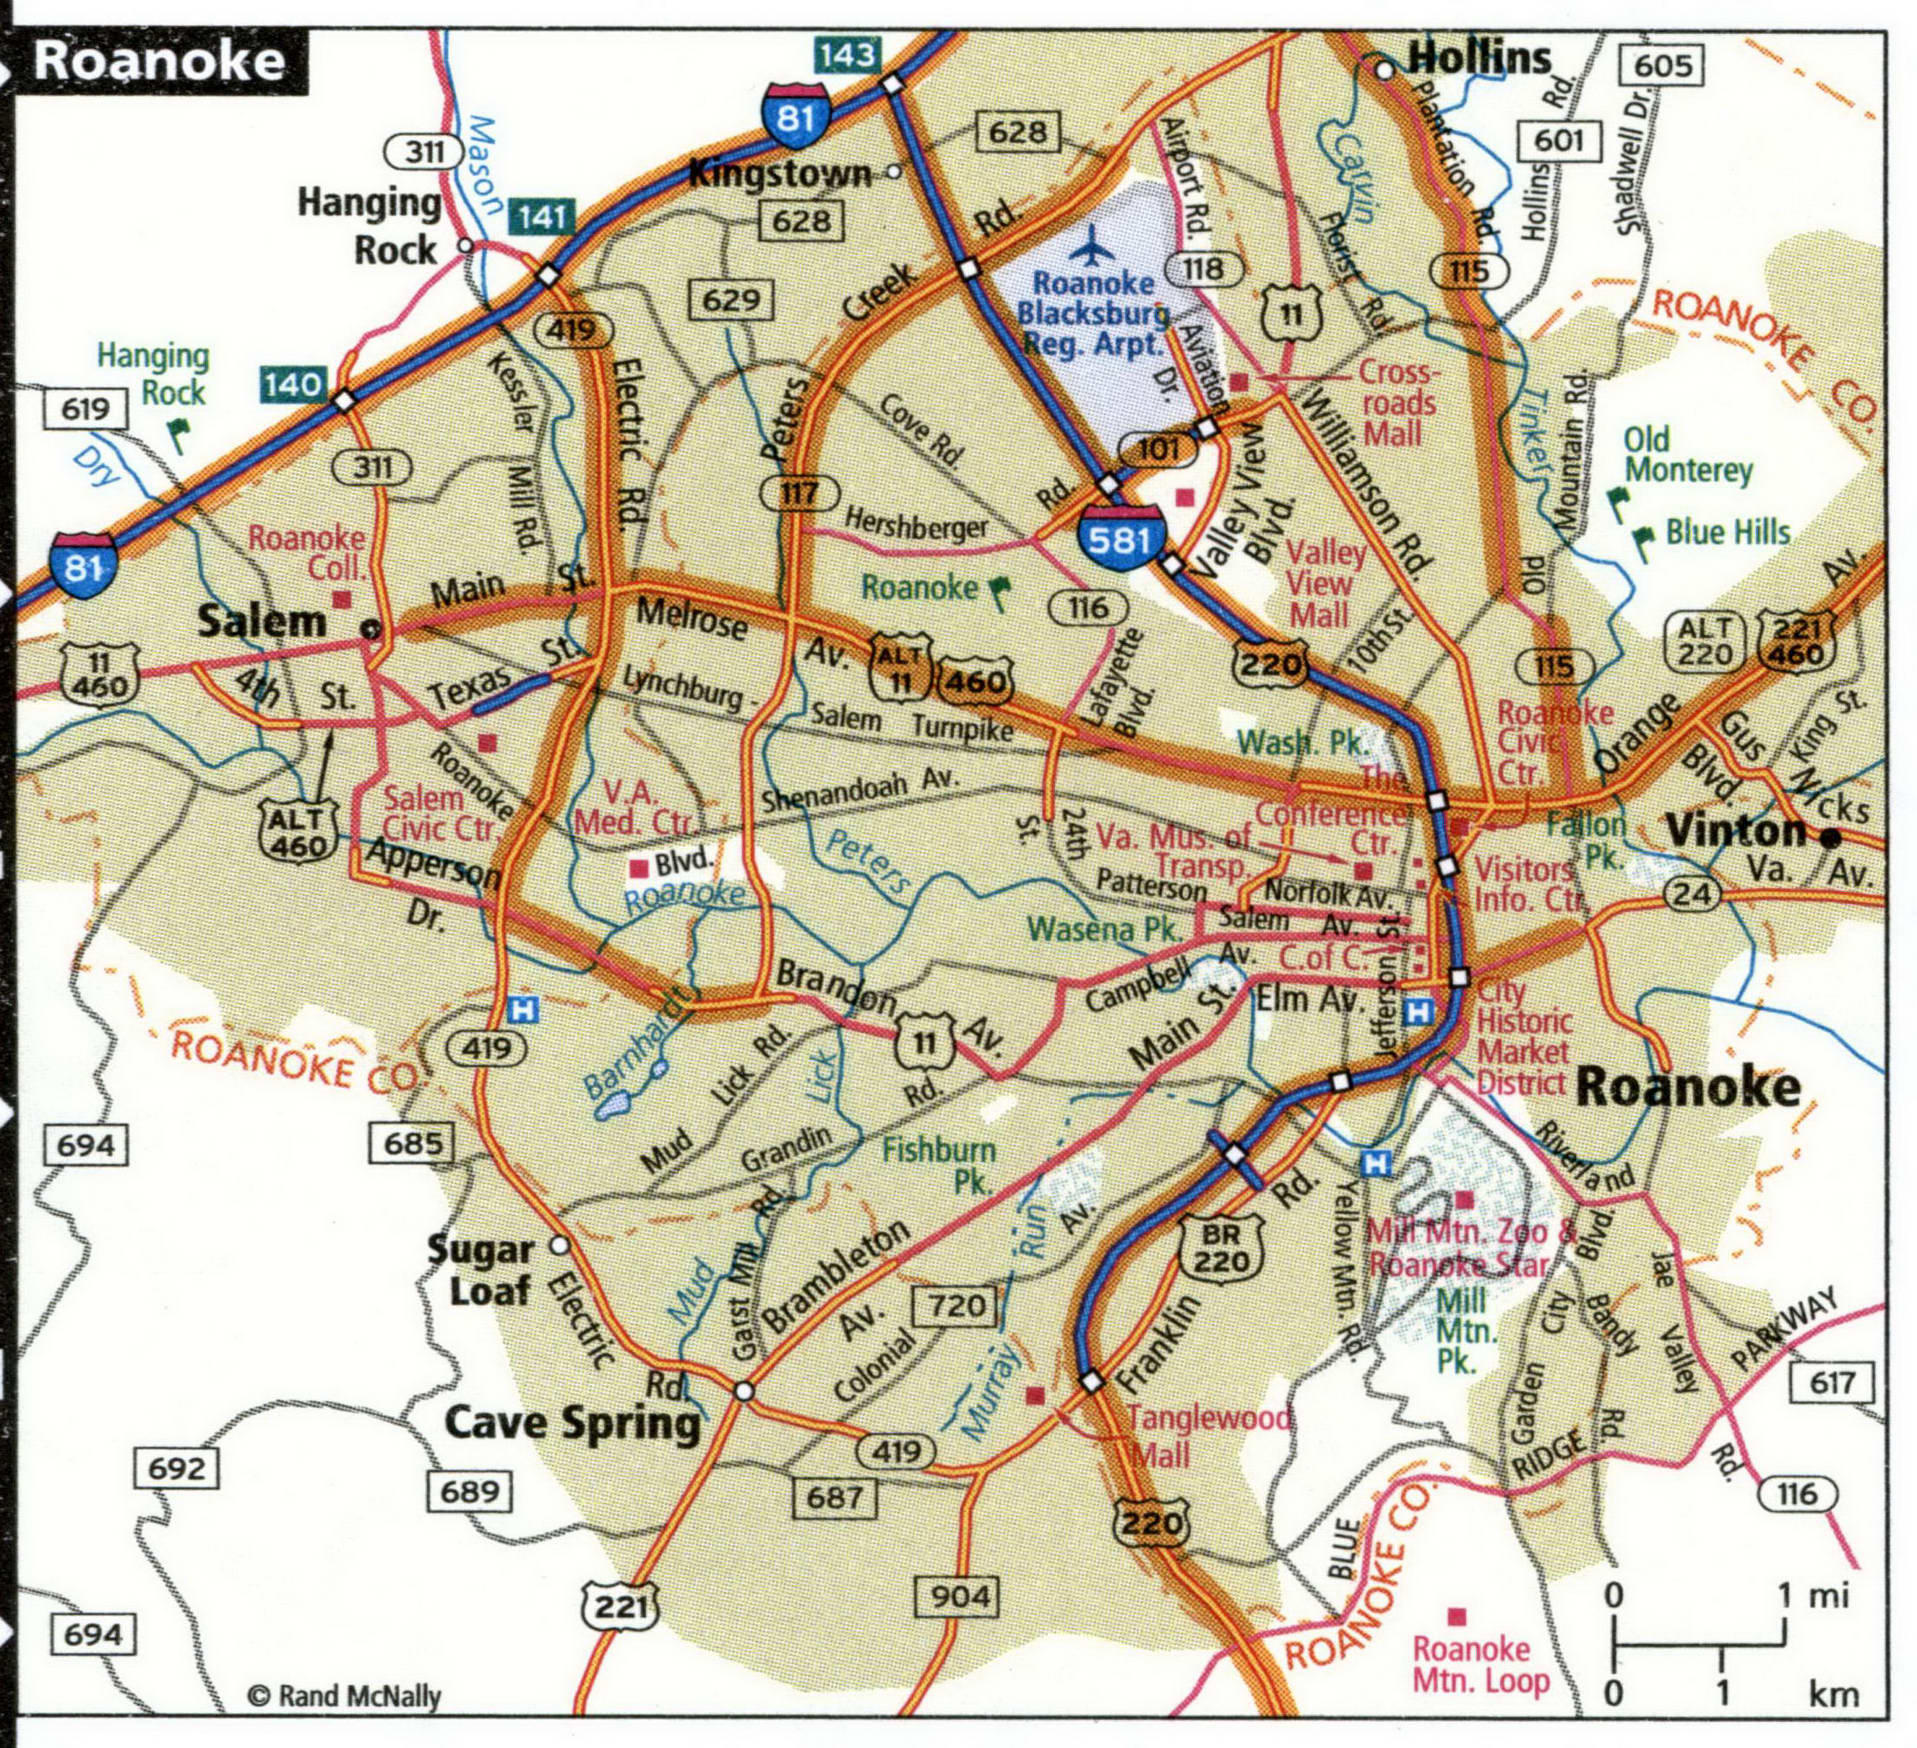 Roanoke city map for truckers